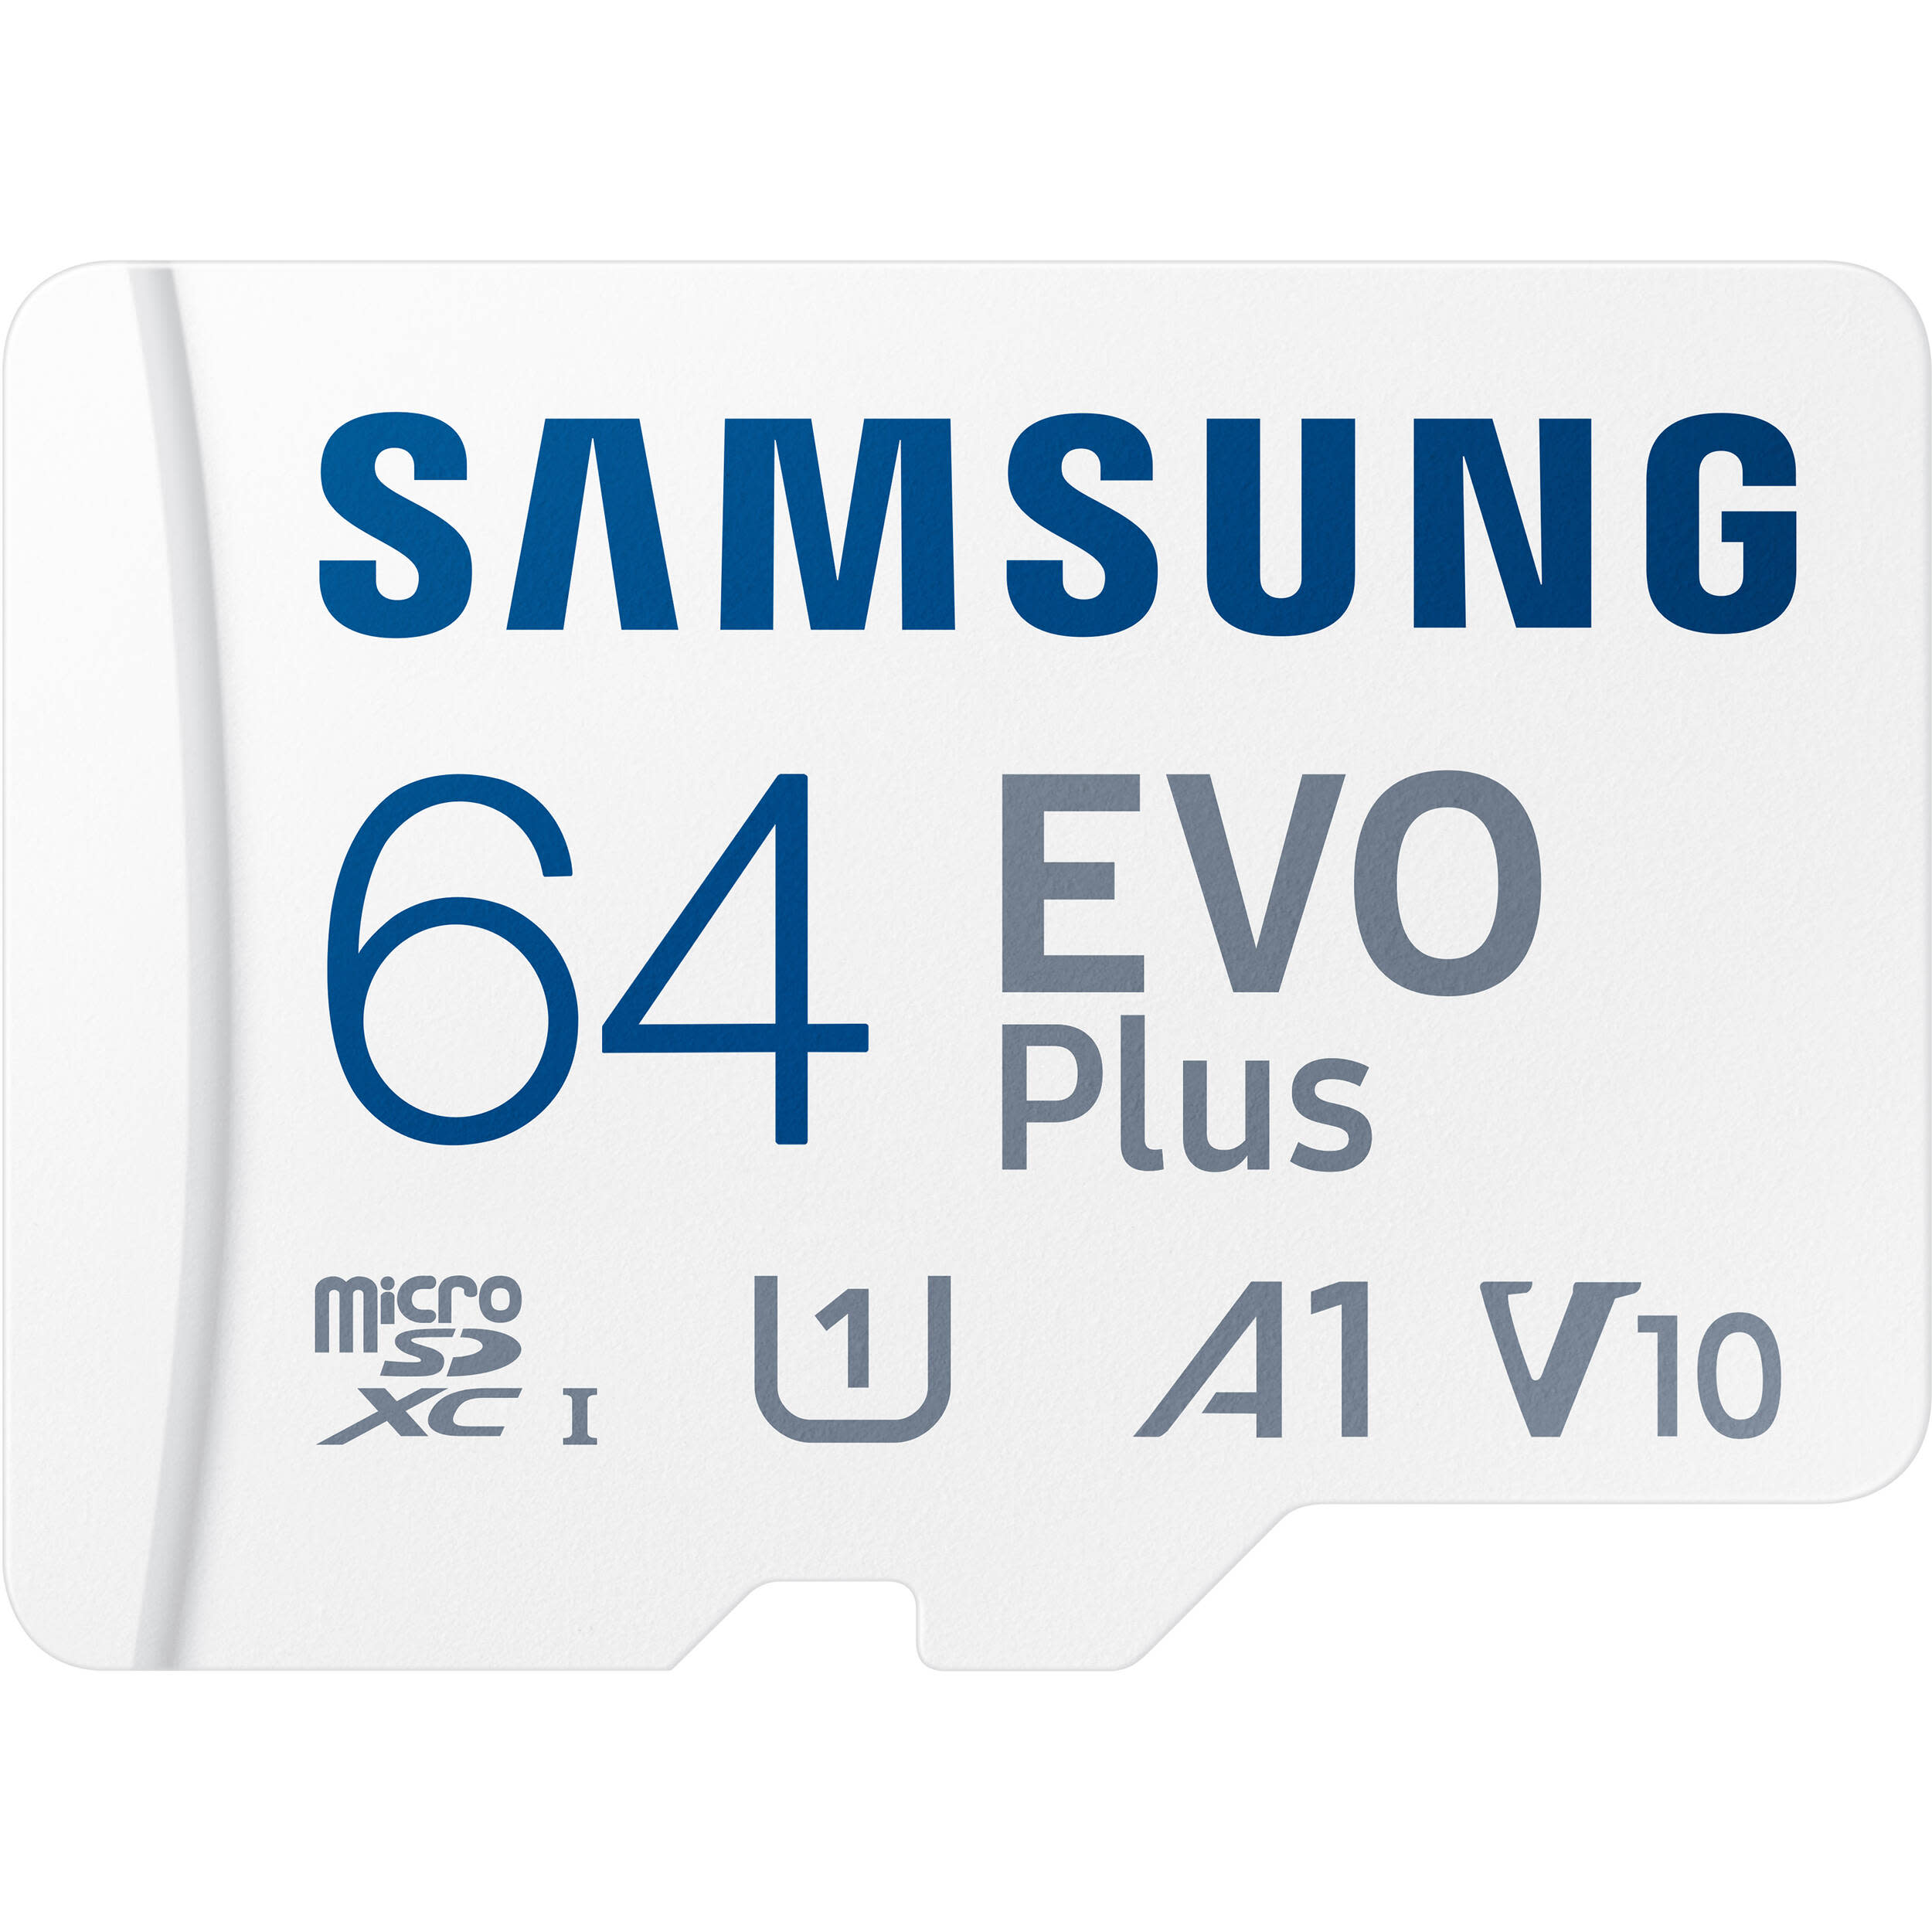 Samsung 64GB EVO Plus + Adapter microSDXC - image 2 of 4